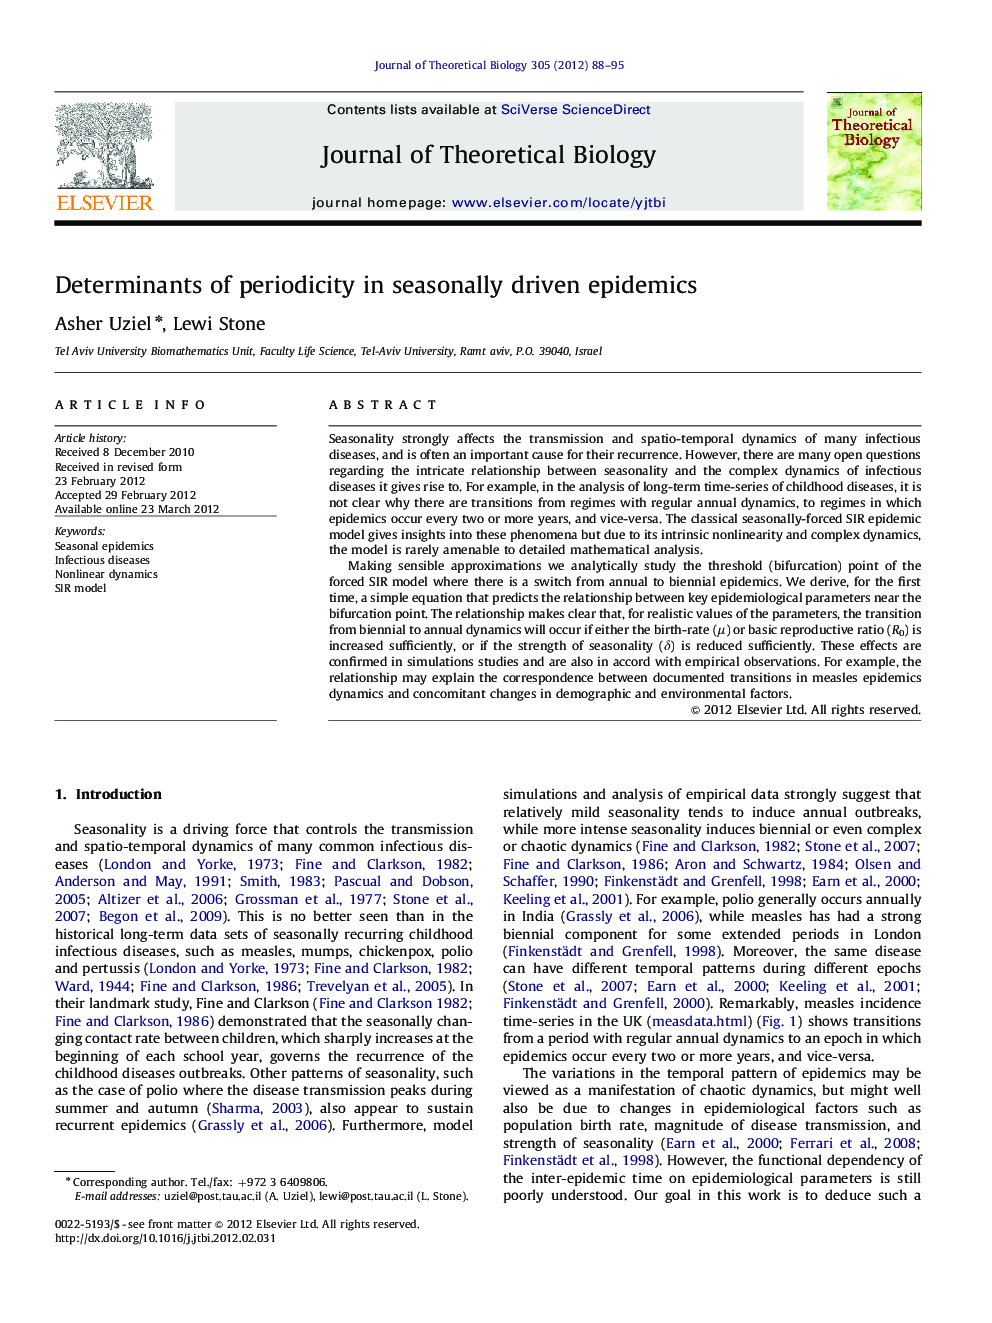 Determinants of periodicity in seasonally driven epidemics